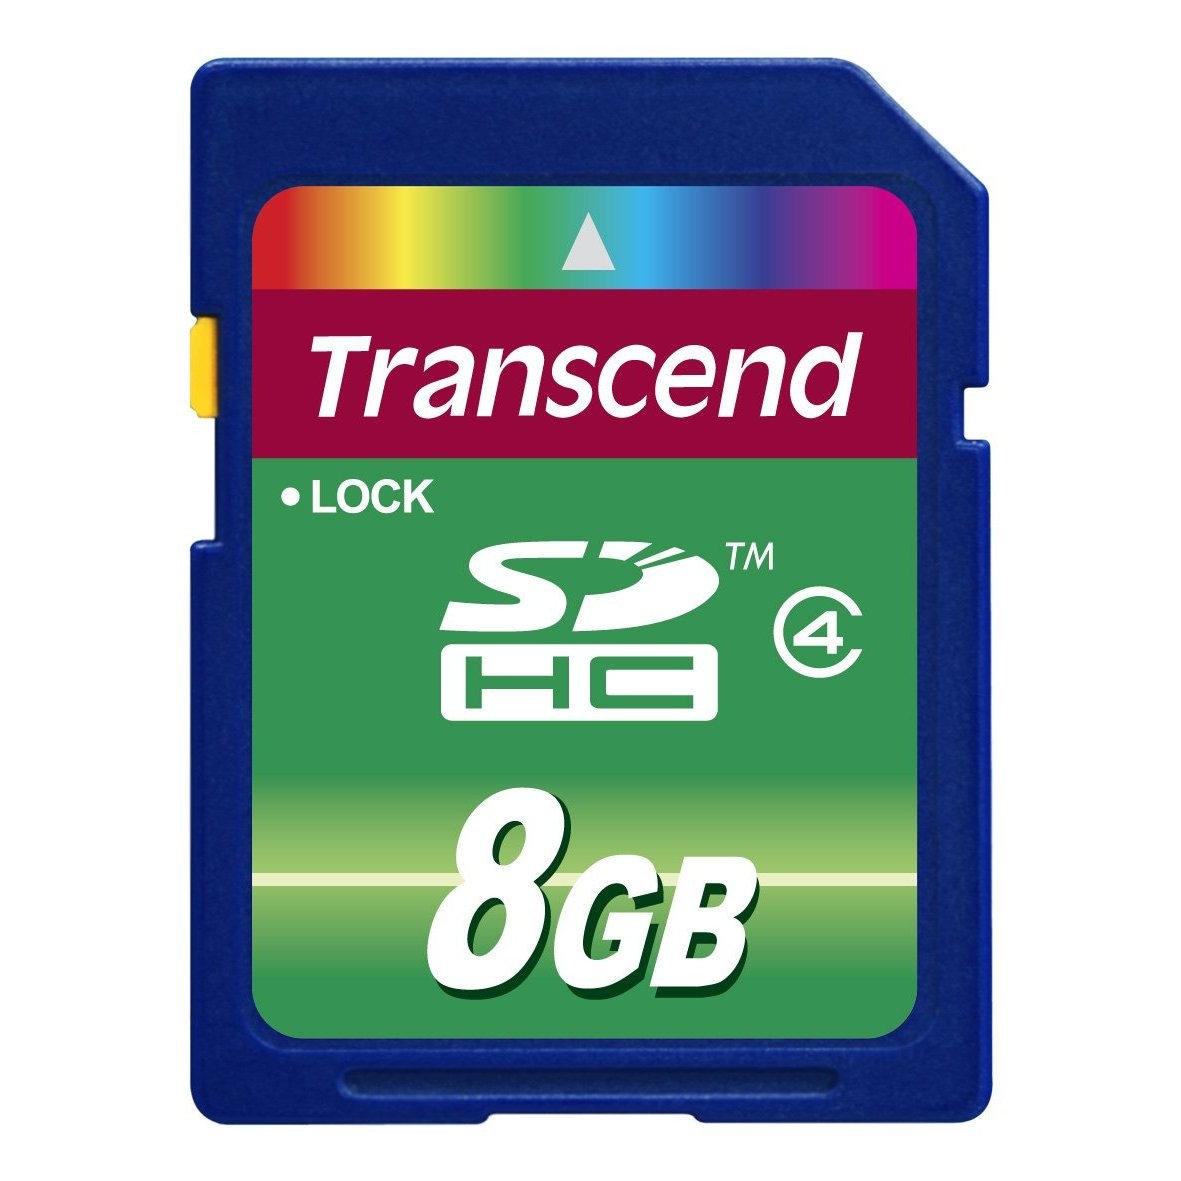 Transcend 8GB Secure Digital High Capacity (SDHC) Class 4 Memory Card